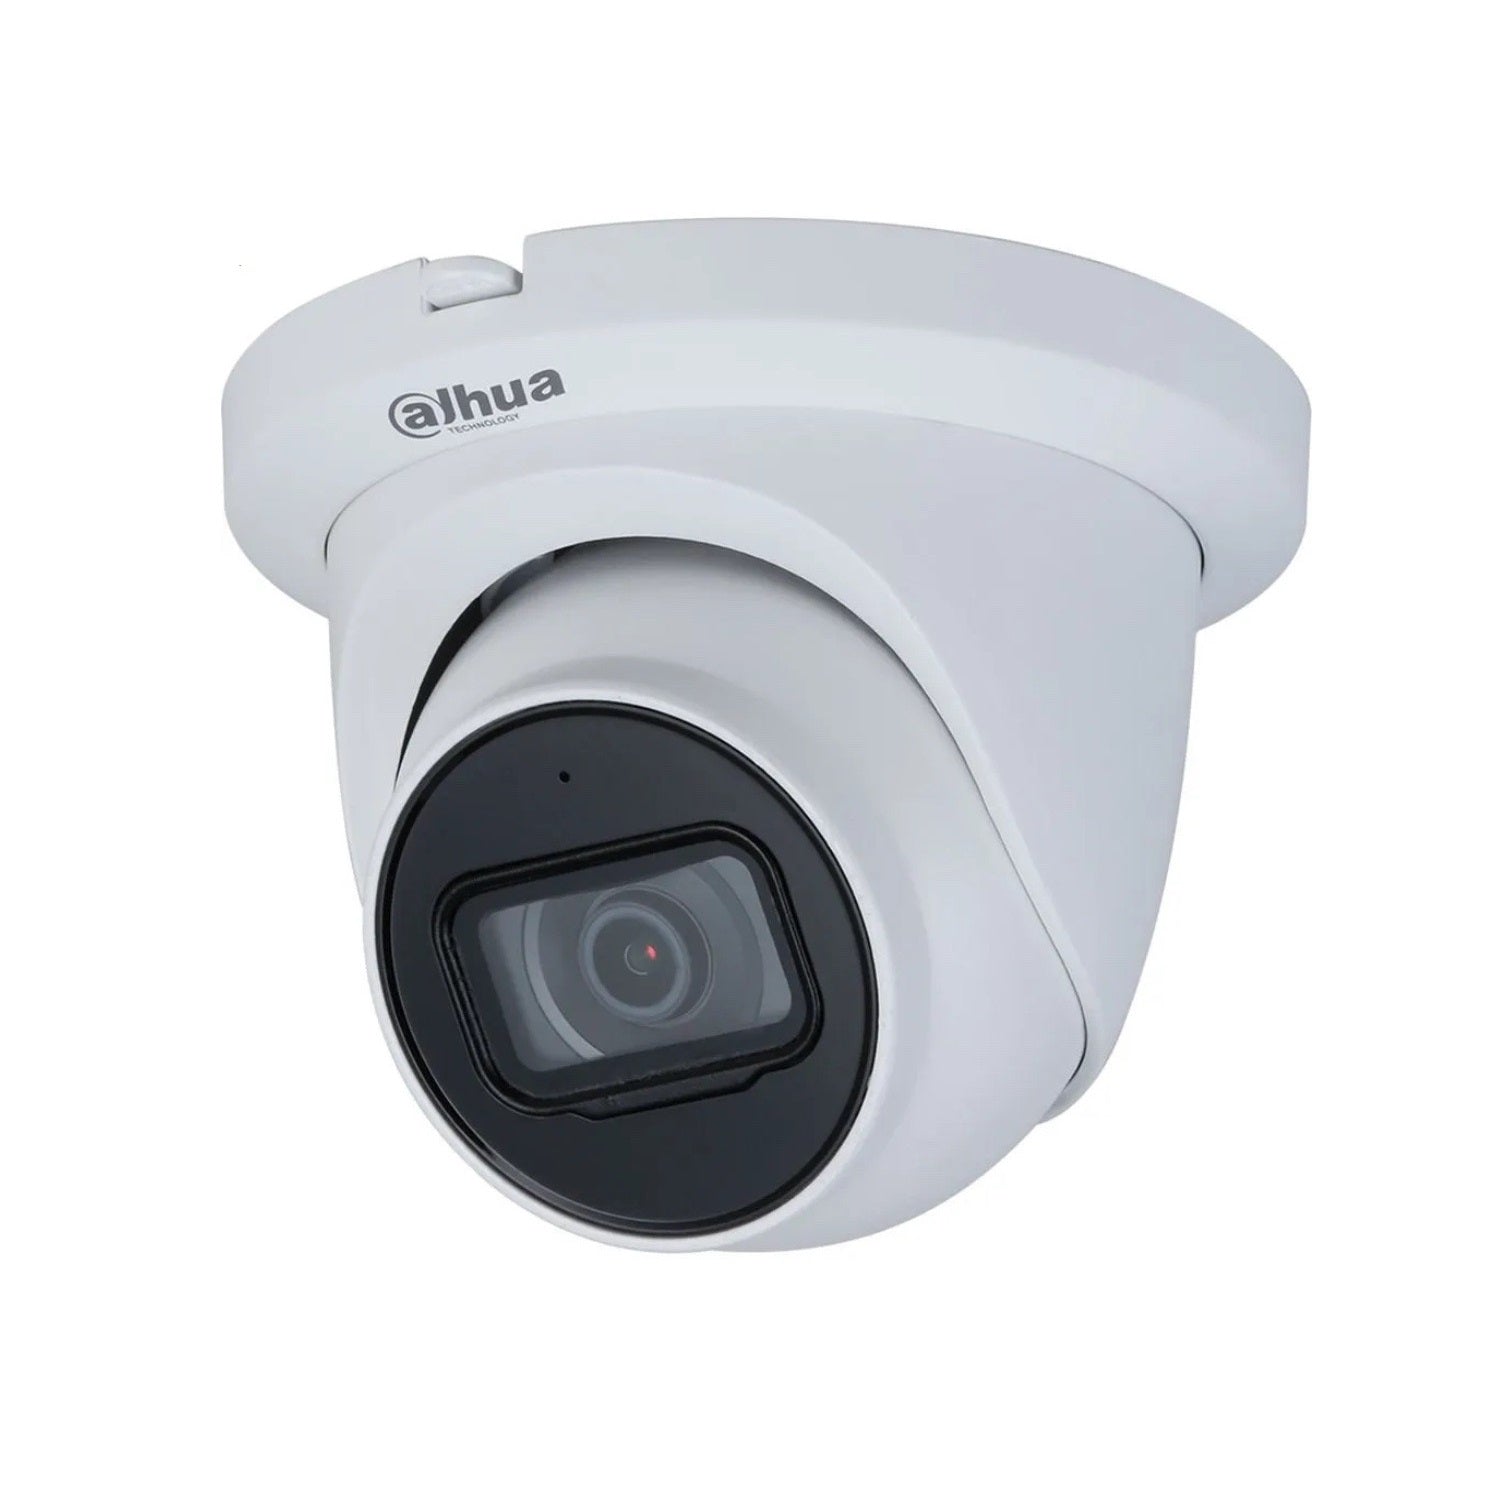 Dahua 2MP Entry IR Fixed-Focal Eyeball Network Camera DH-IPC-HDW1230TP-A-S4